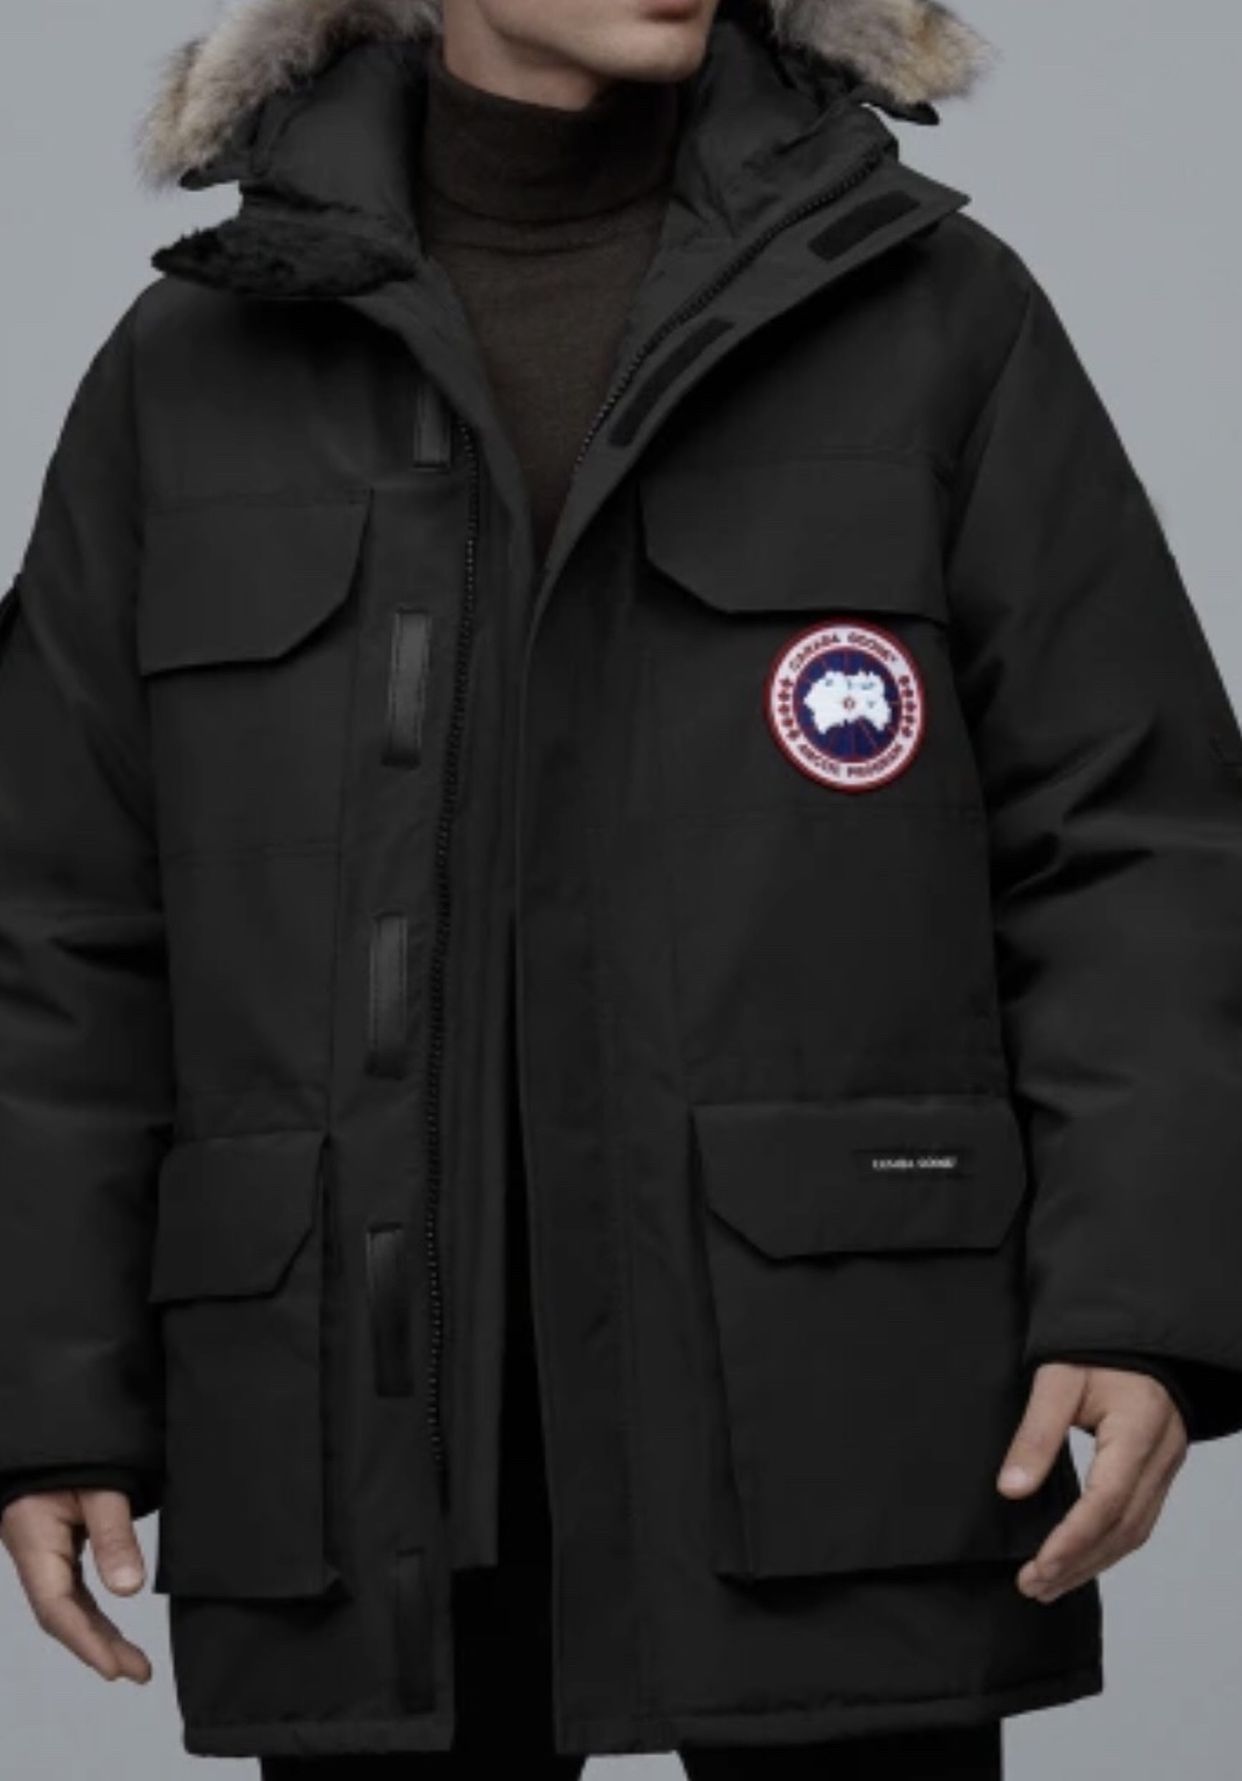 Canada Goose Expedition Parka Coat & Jacket, Size: Large, Insane Sale Price!!!